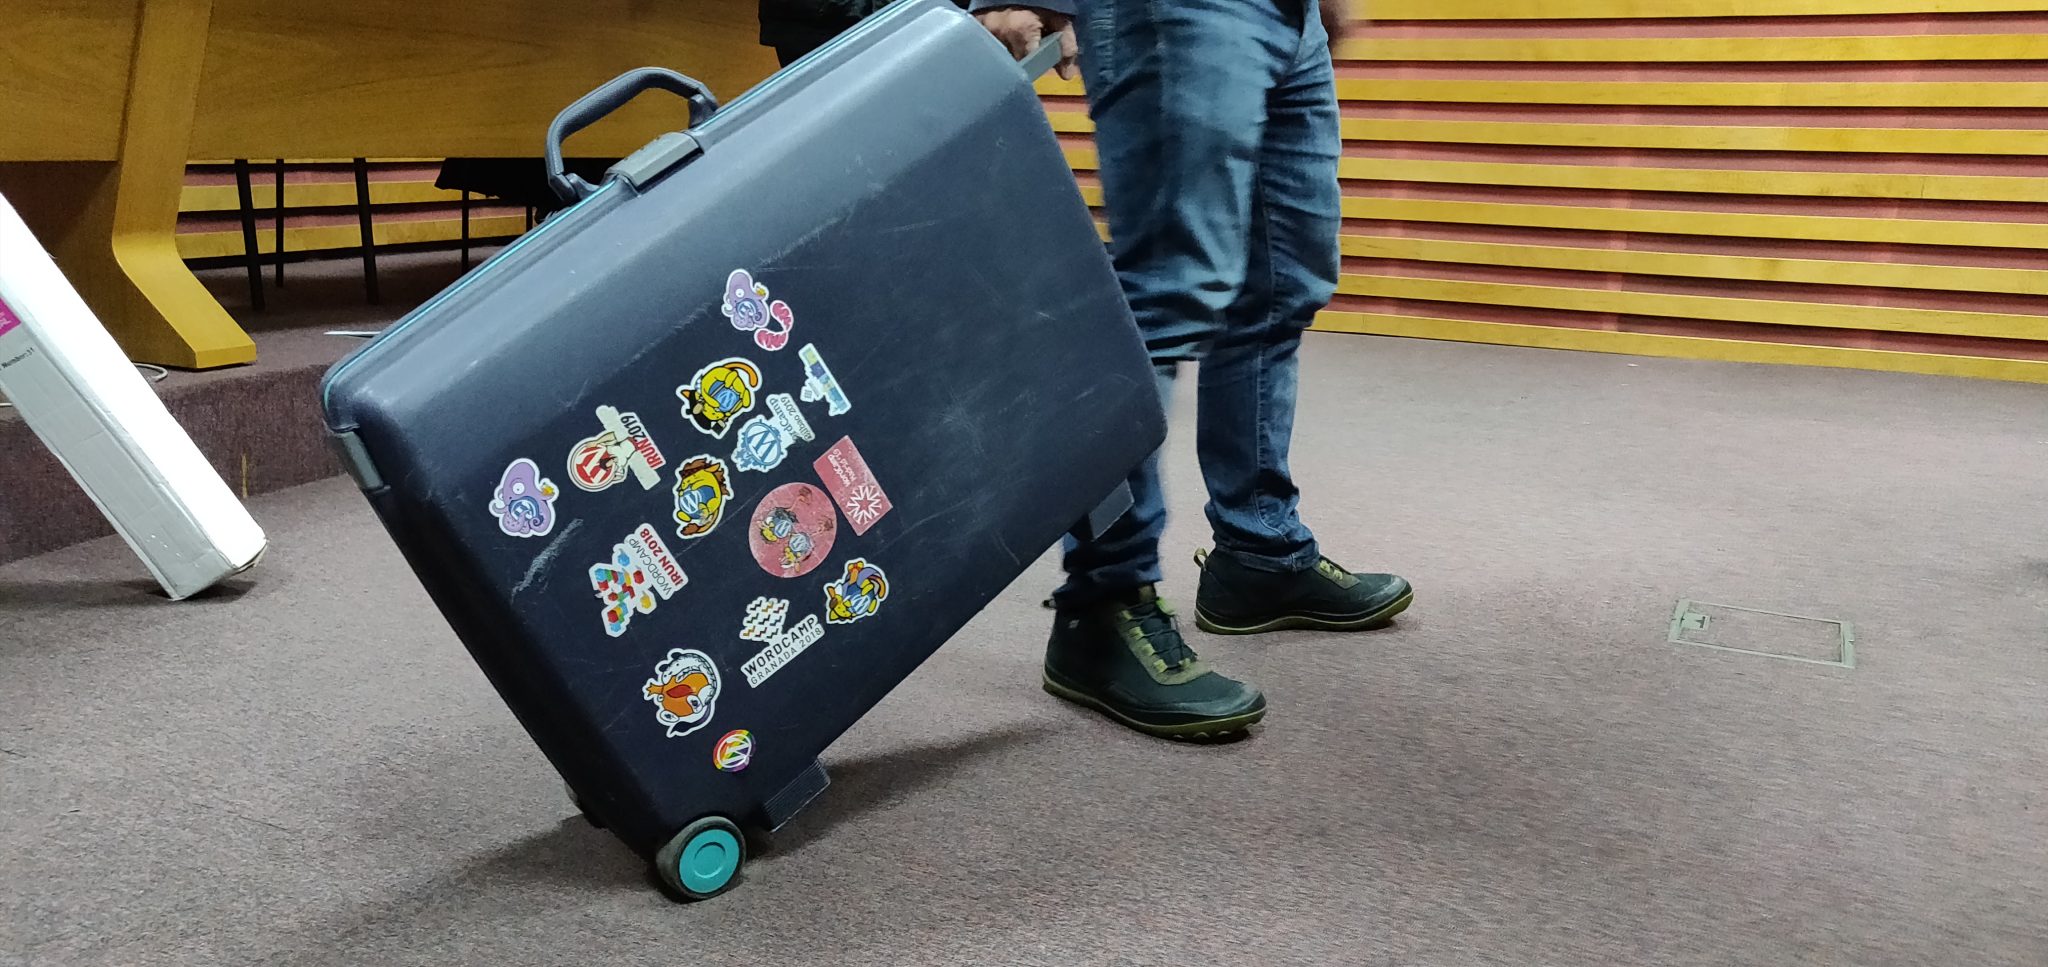 Spanish WordCamp suitcase